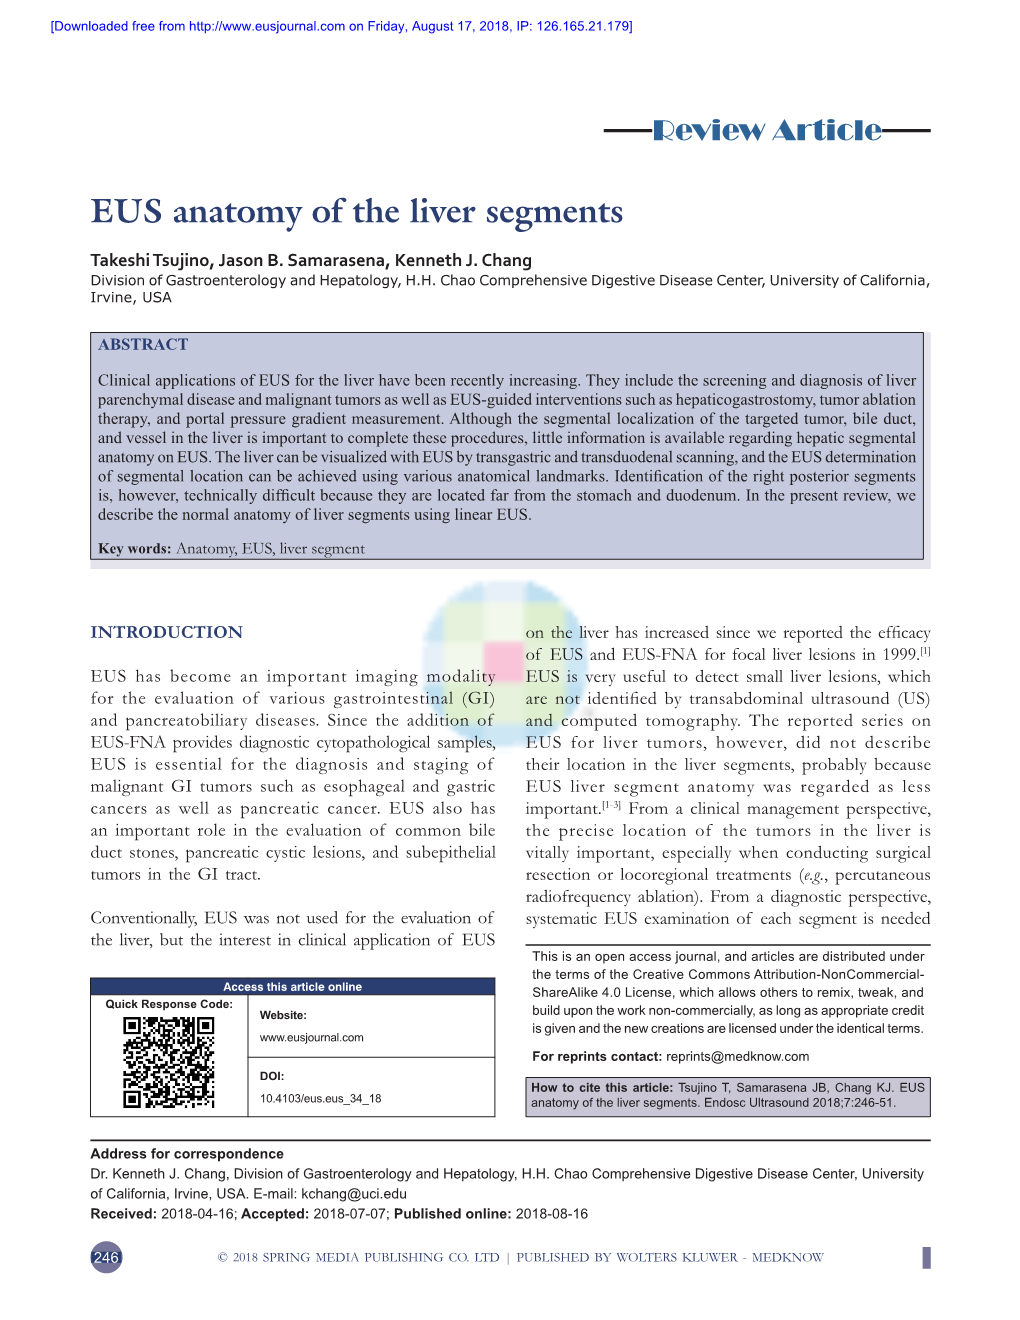 EUS Anatomy of the Liver Segments